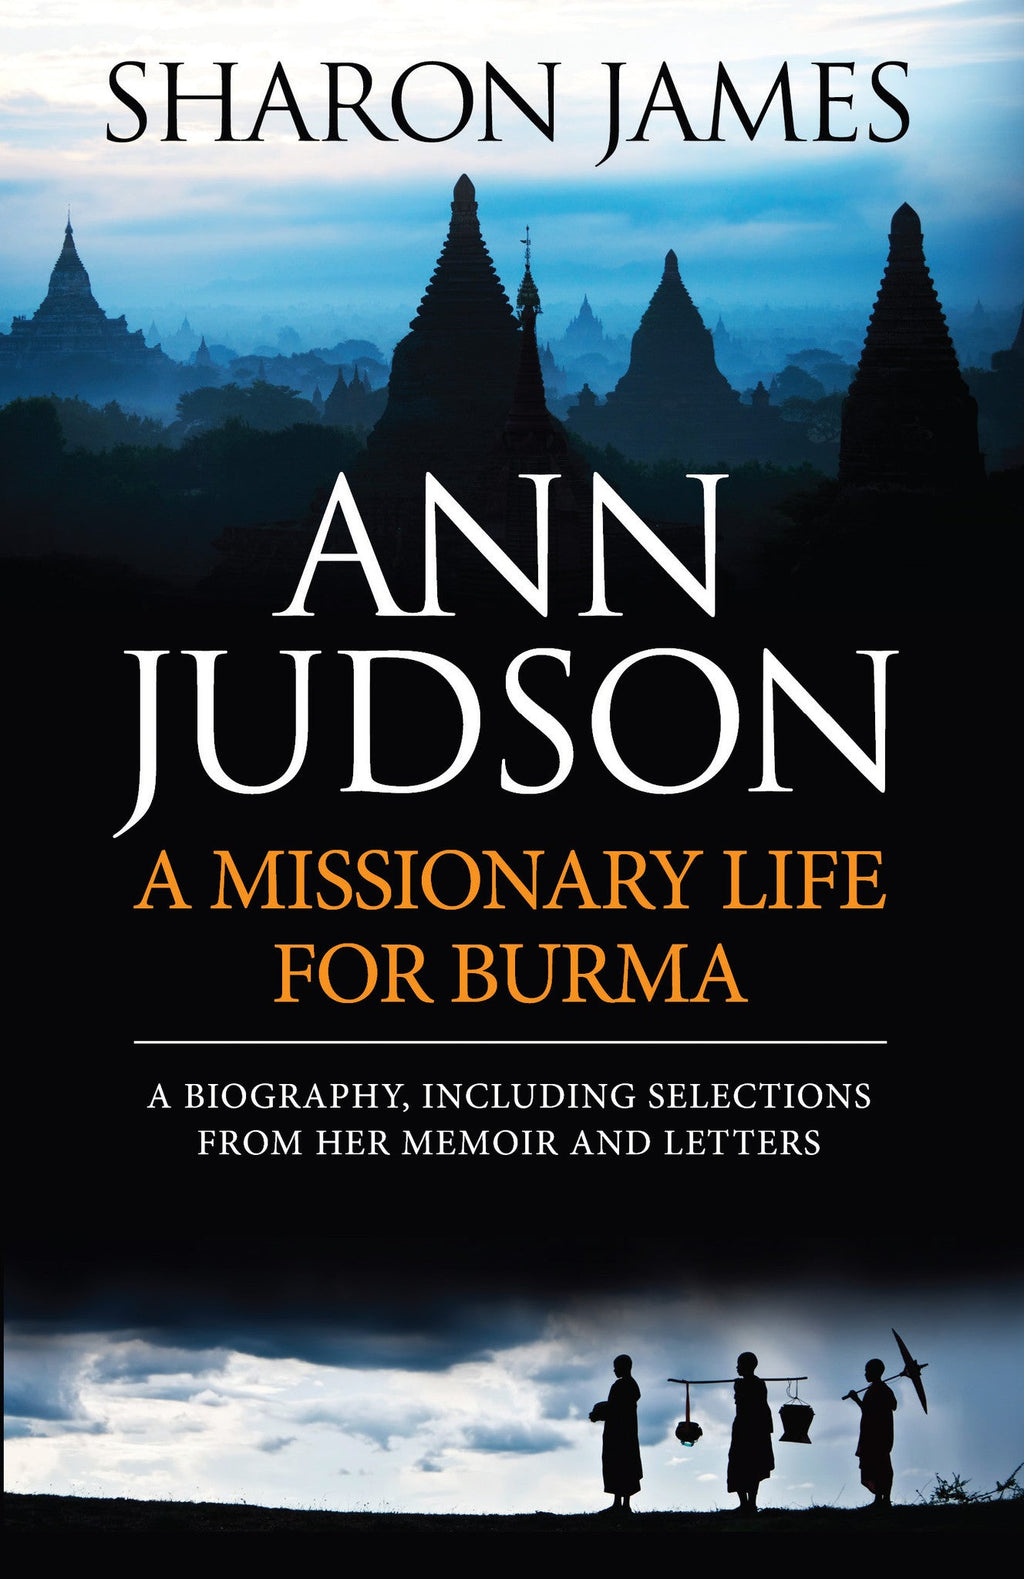 Ann Judson: A Missionary Life for Burma